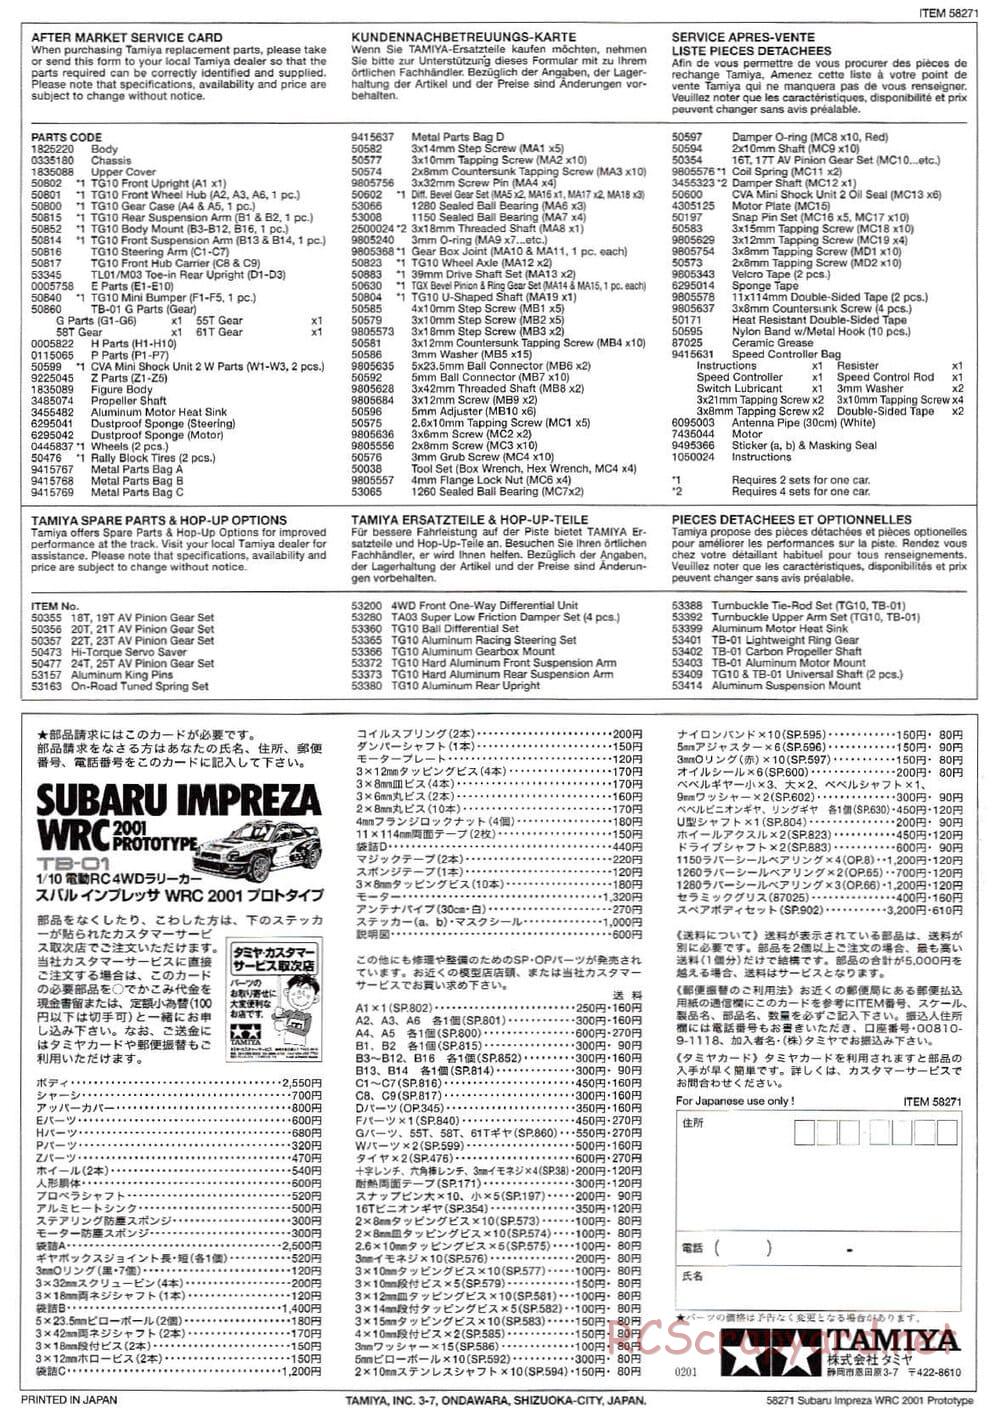 Tamiya - Subaru Impreza WRC 2001 Prototype - TB-01 Chassis - Manual - Page 25